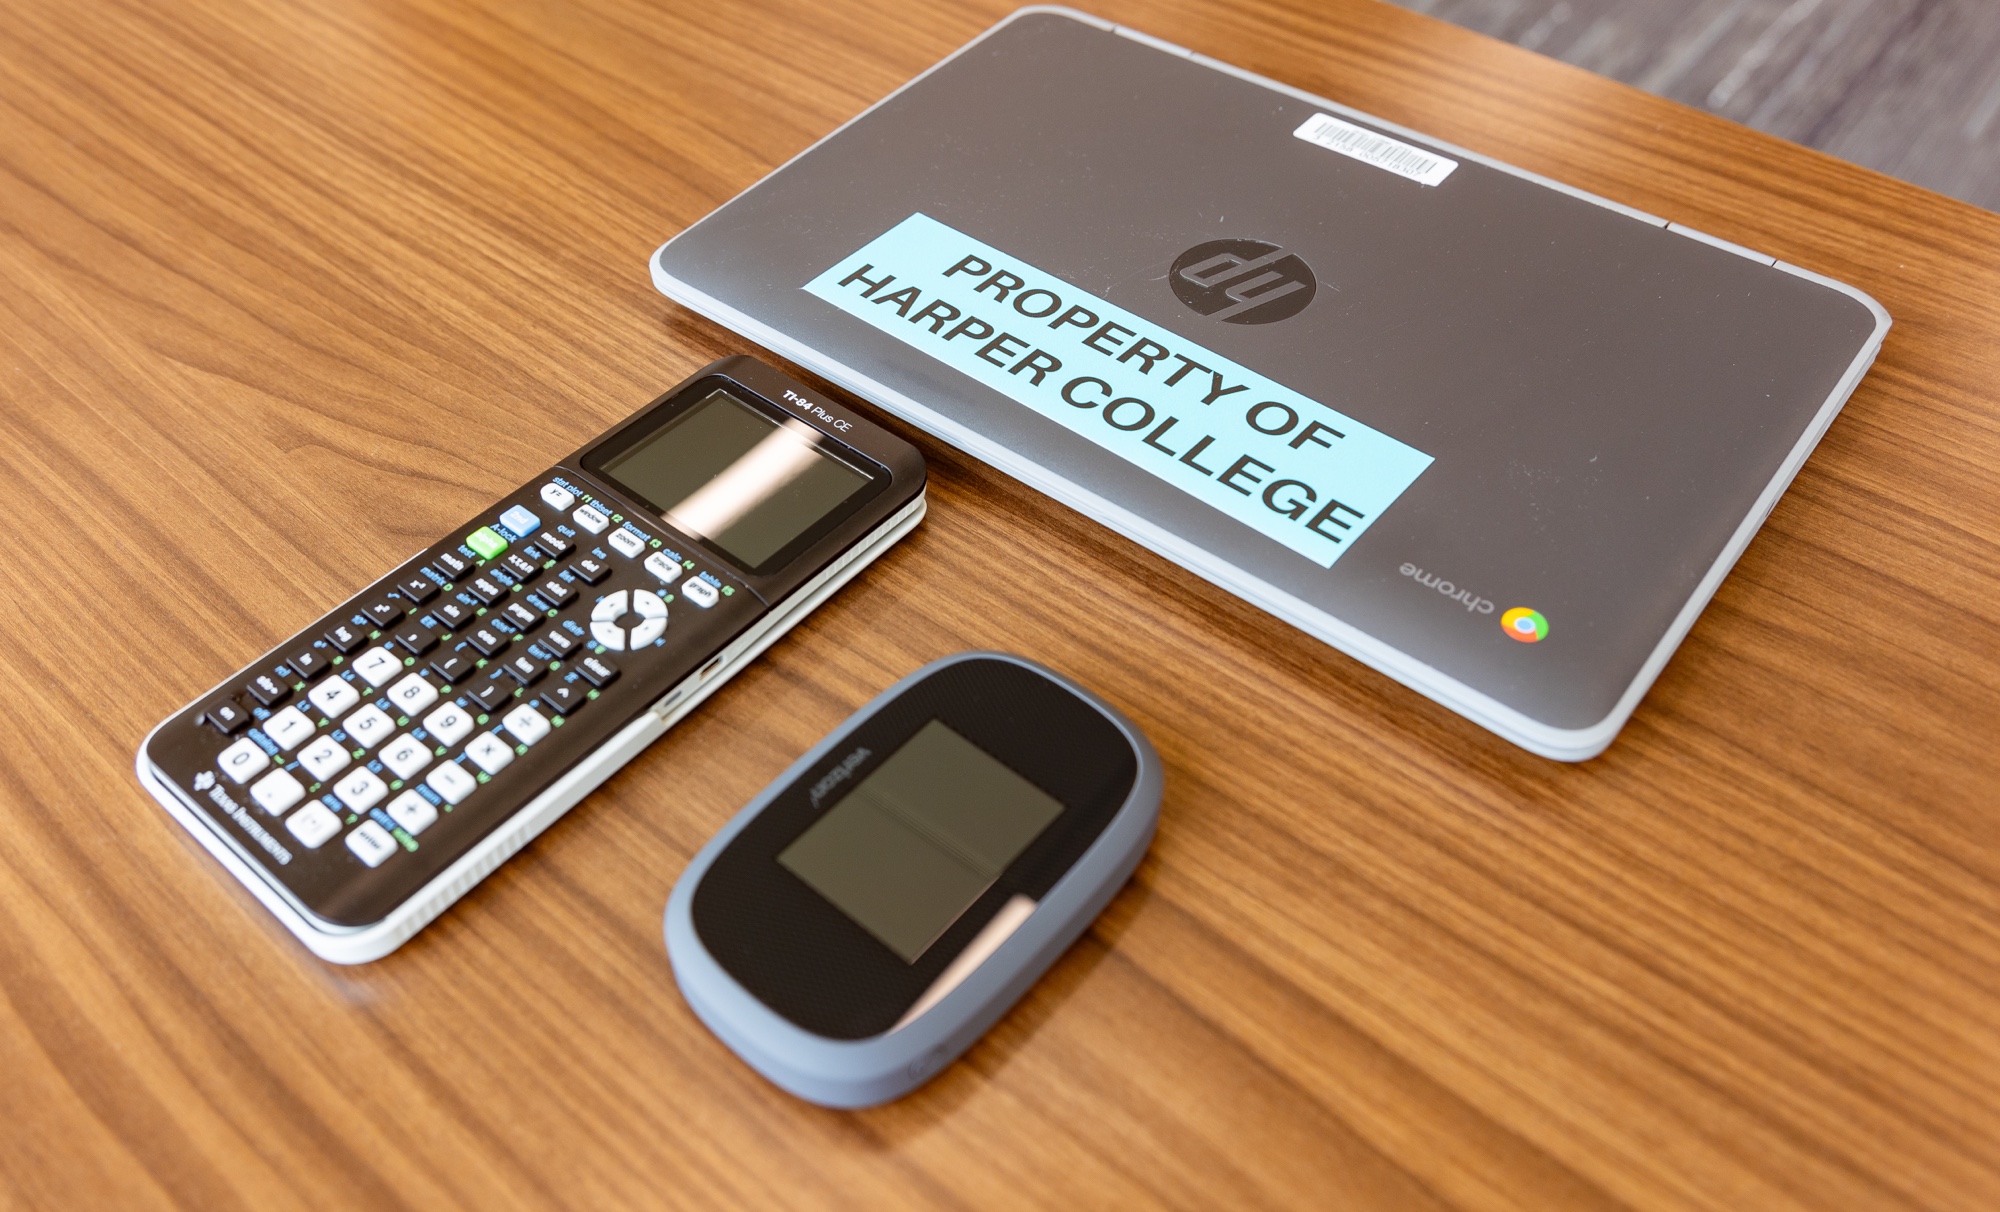 Chromebook, calculator, and hotspot on a table